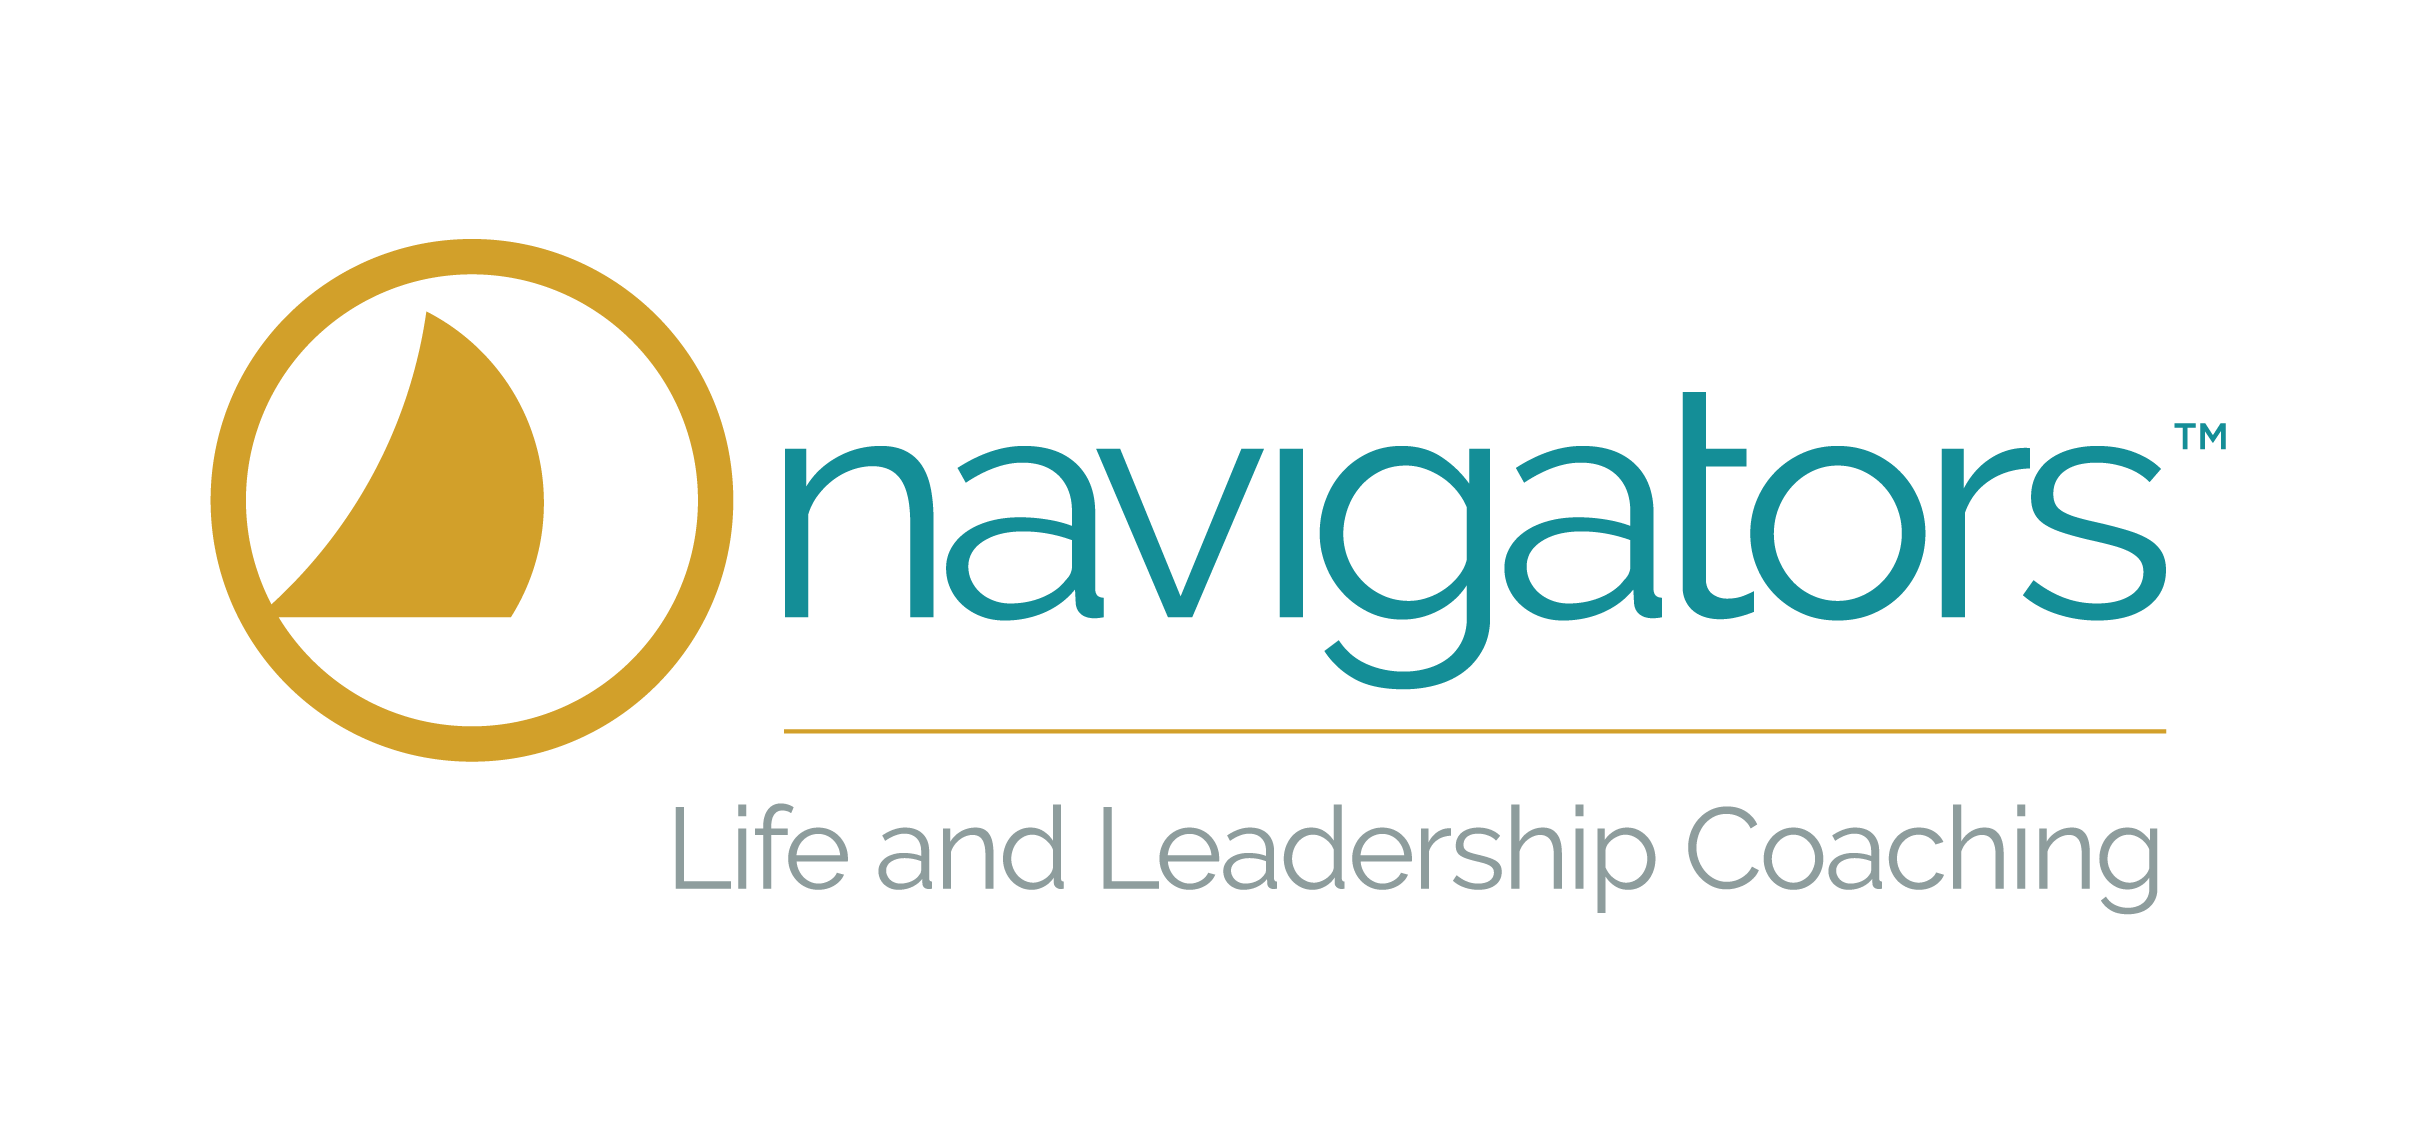 Navigator Church Ministries